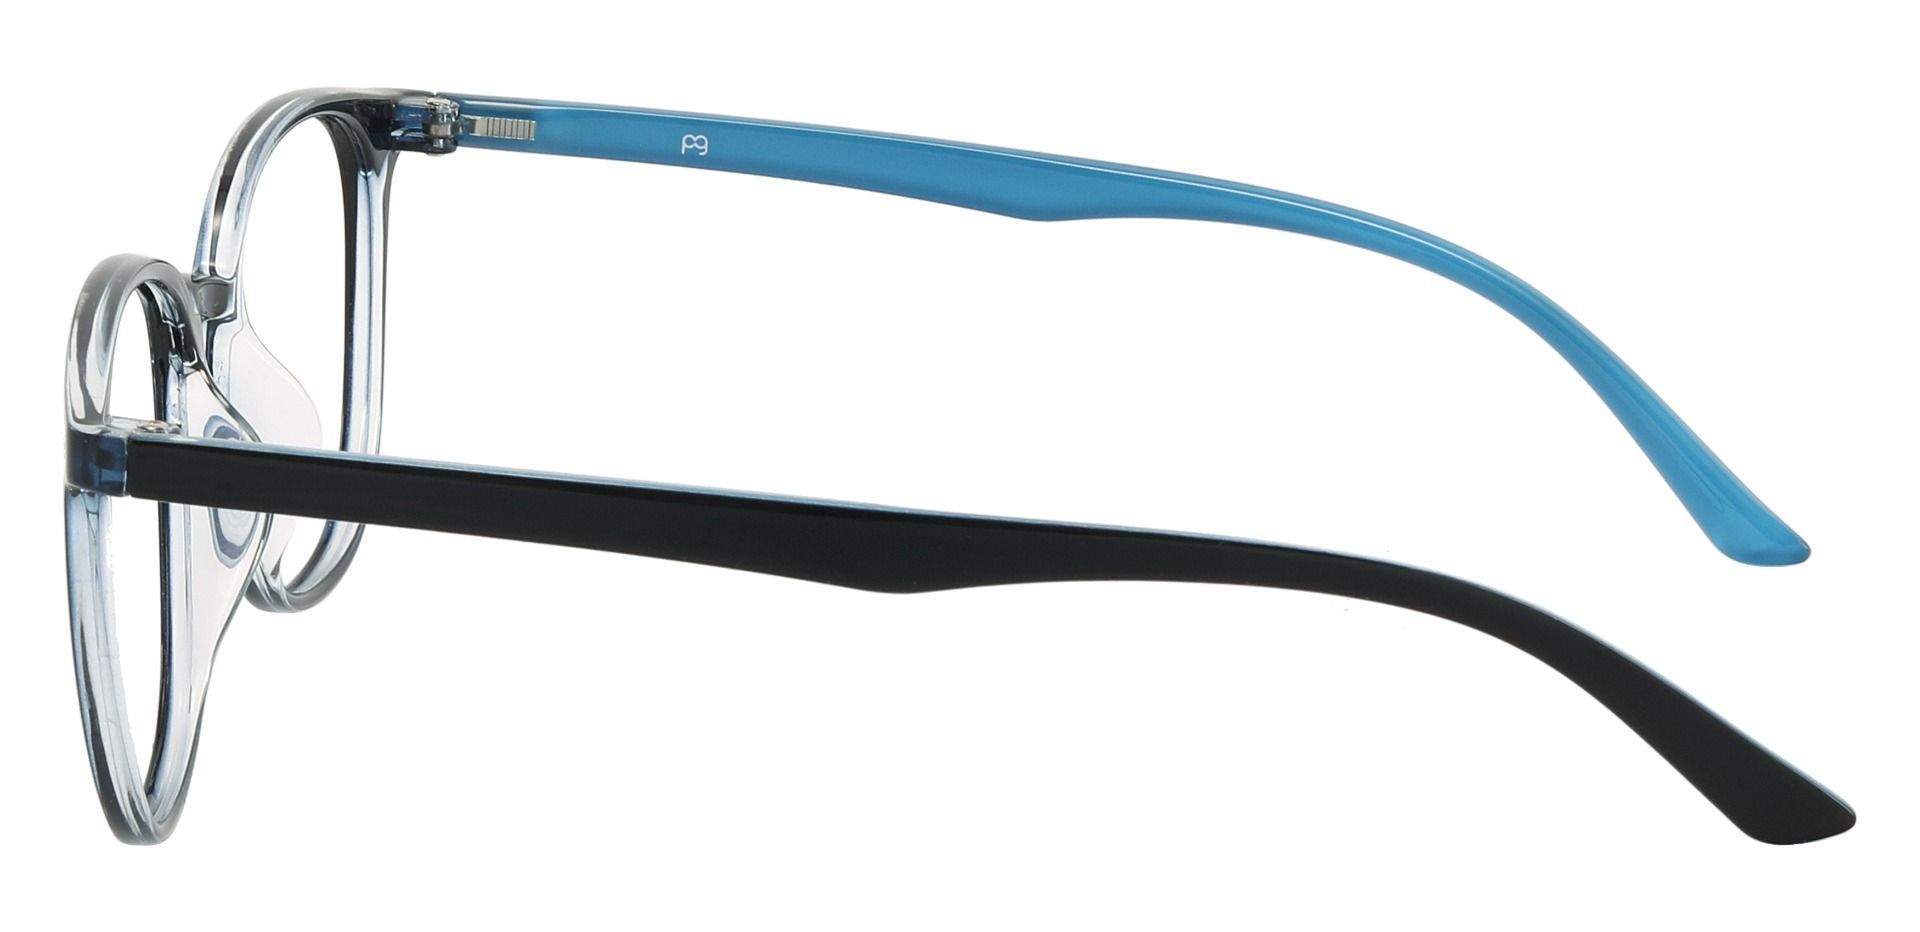 Kelso Square Progressive Glasses - Blue